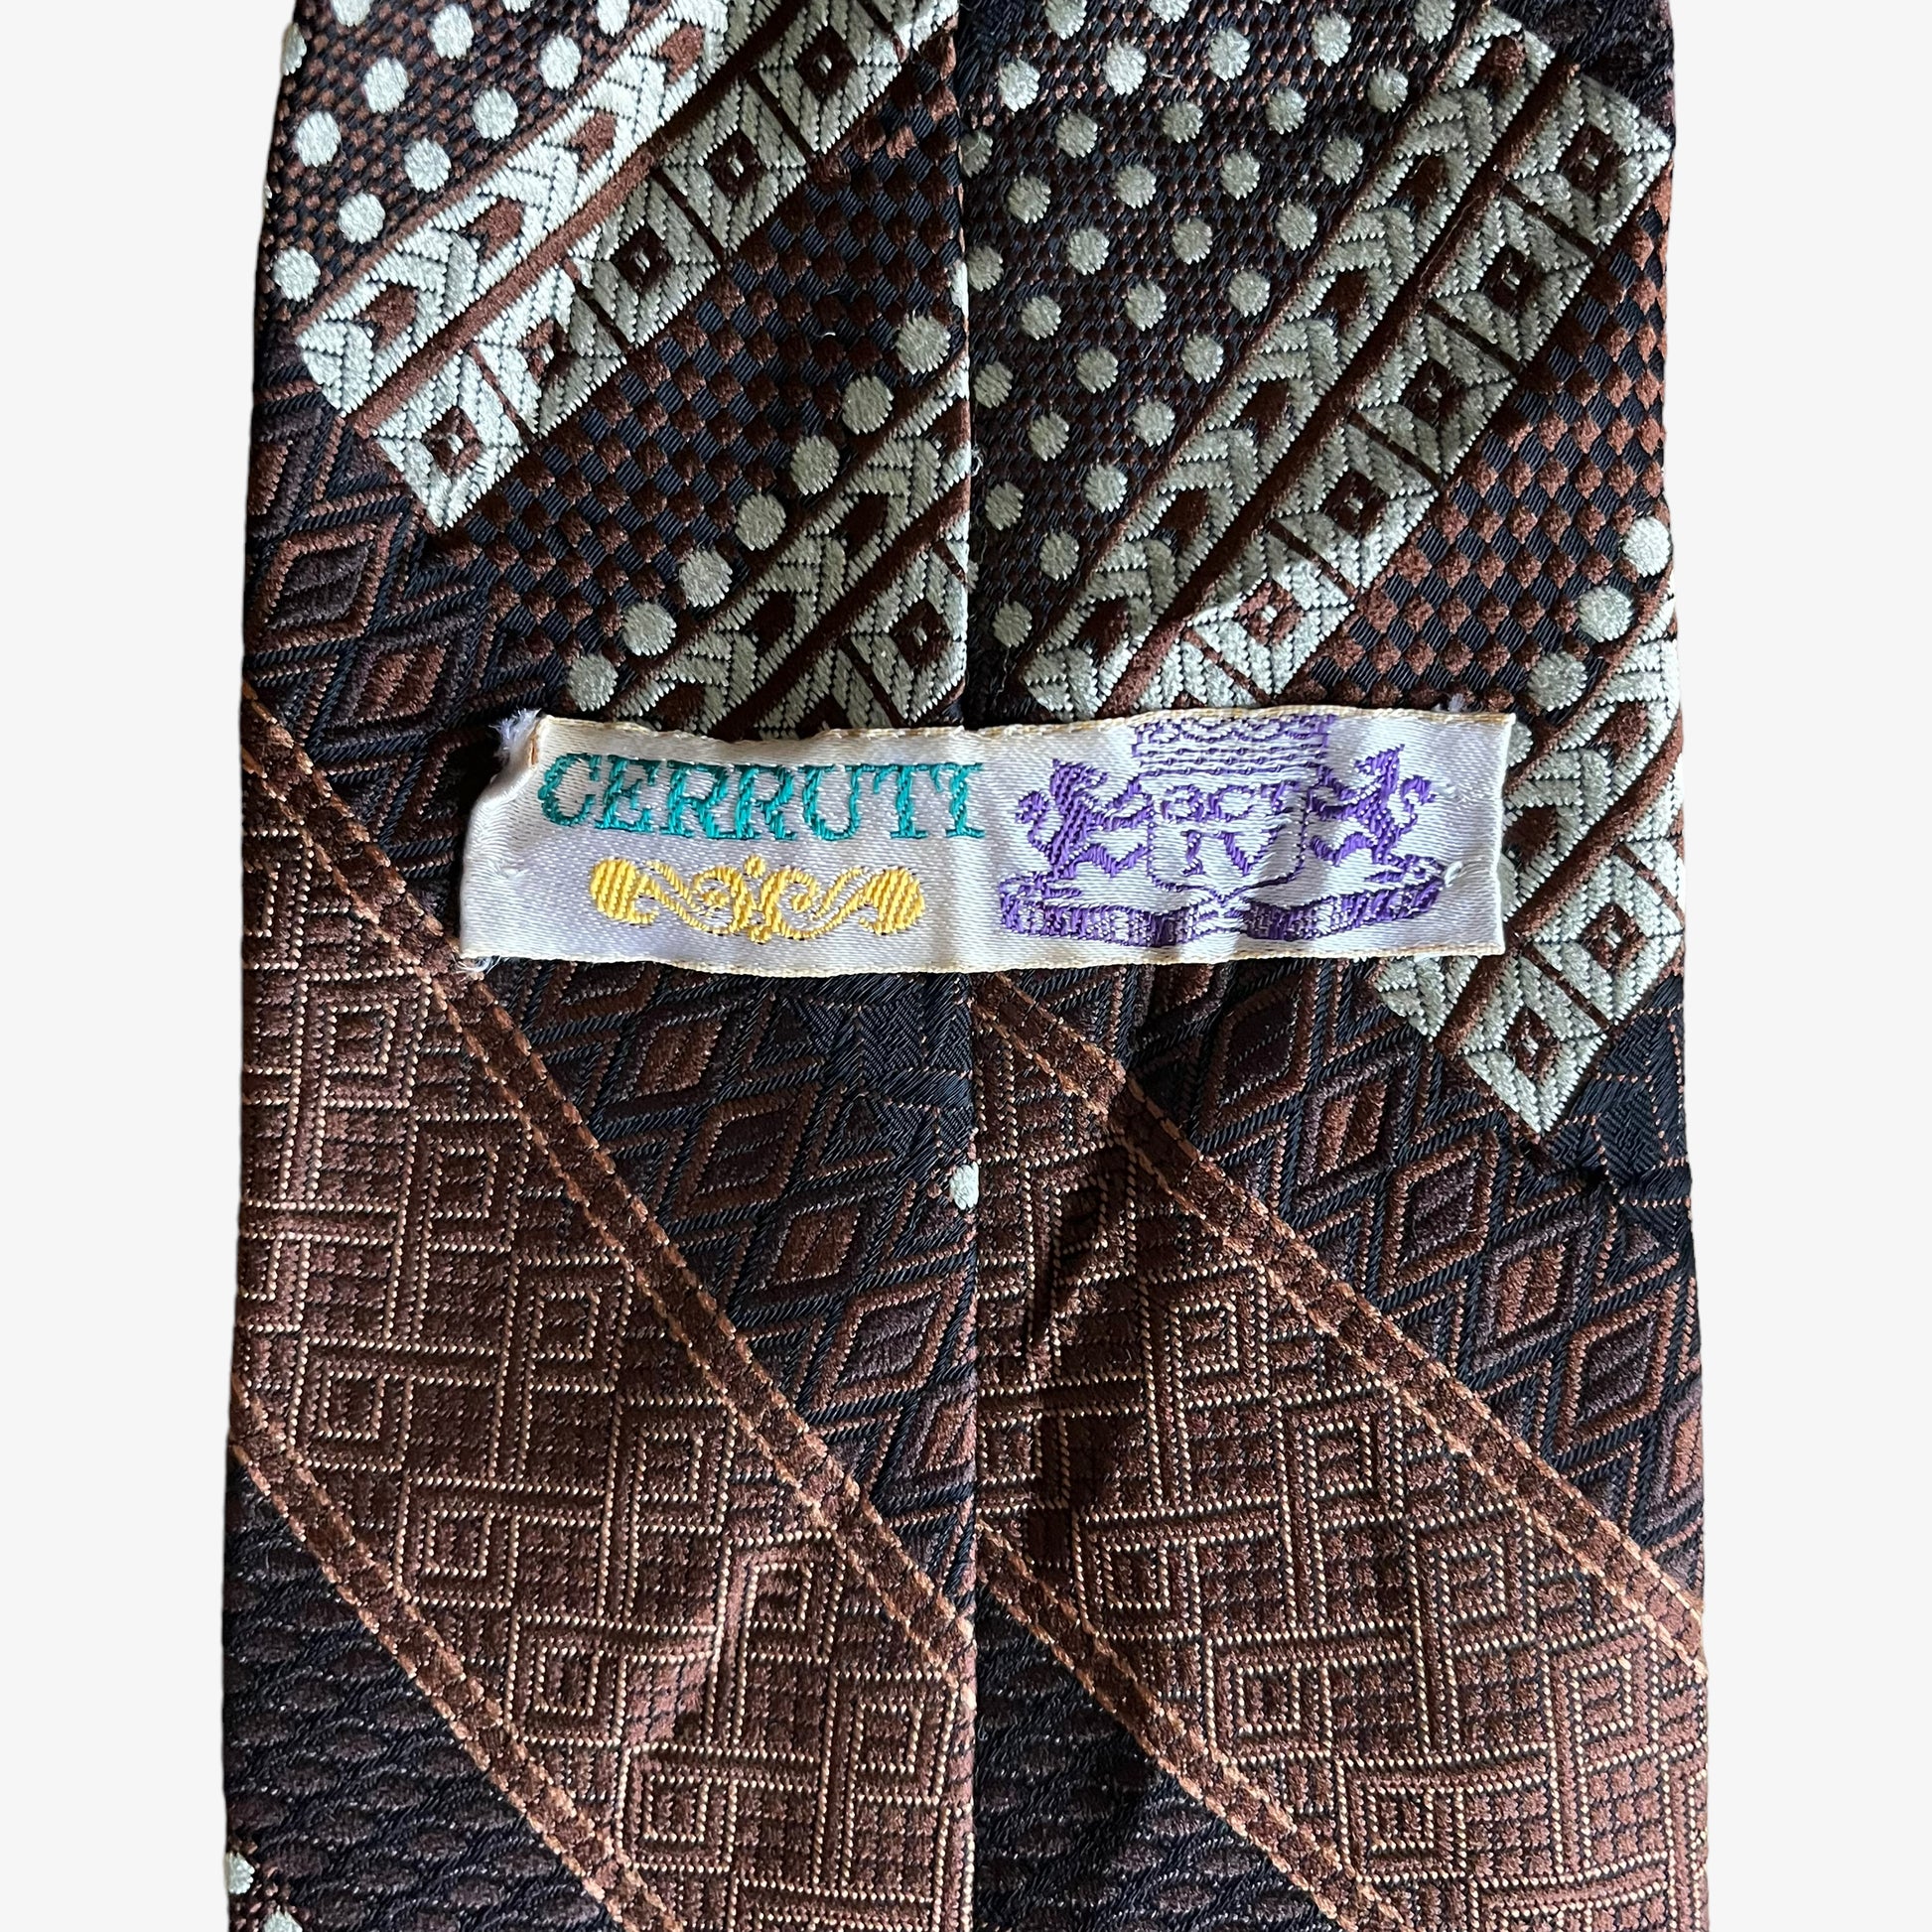 Vintage 70s Cerruti Abstract Print Silk Tie Label - Casspios Dream 